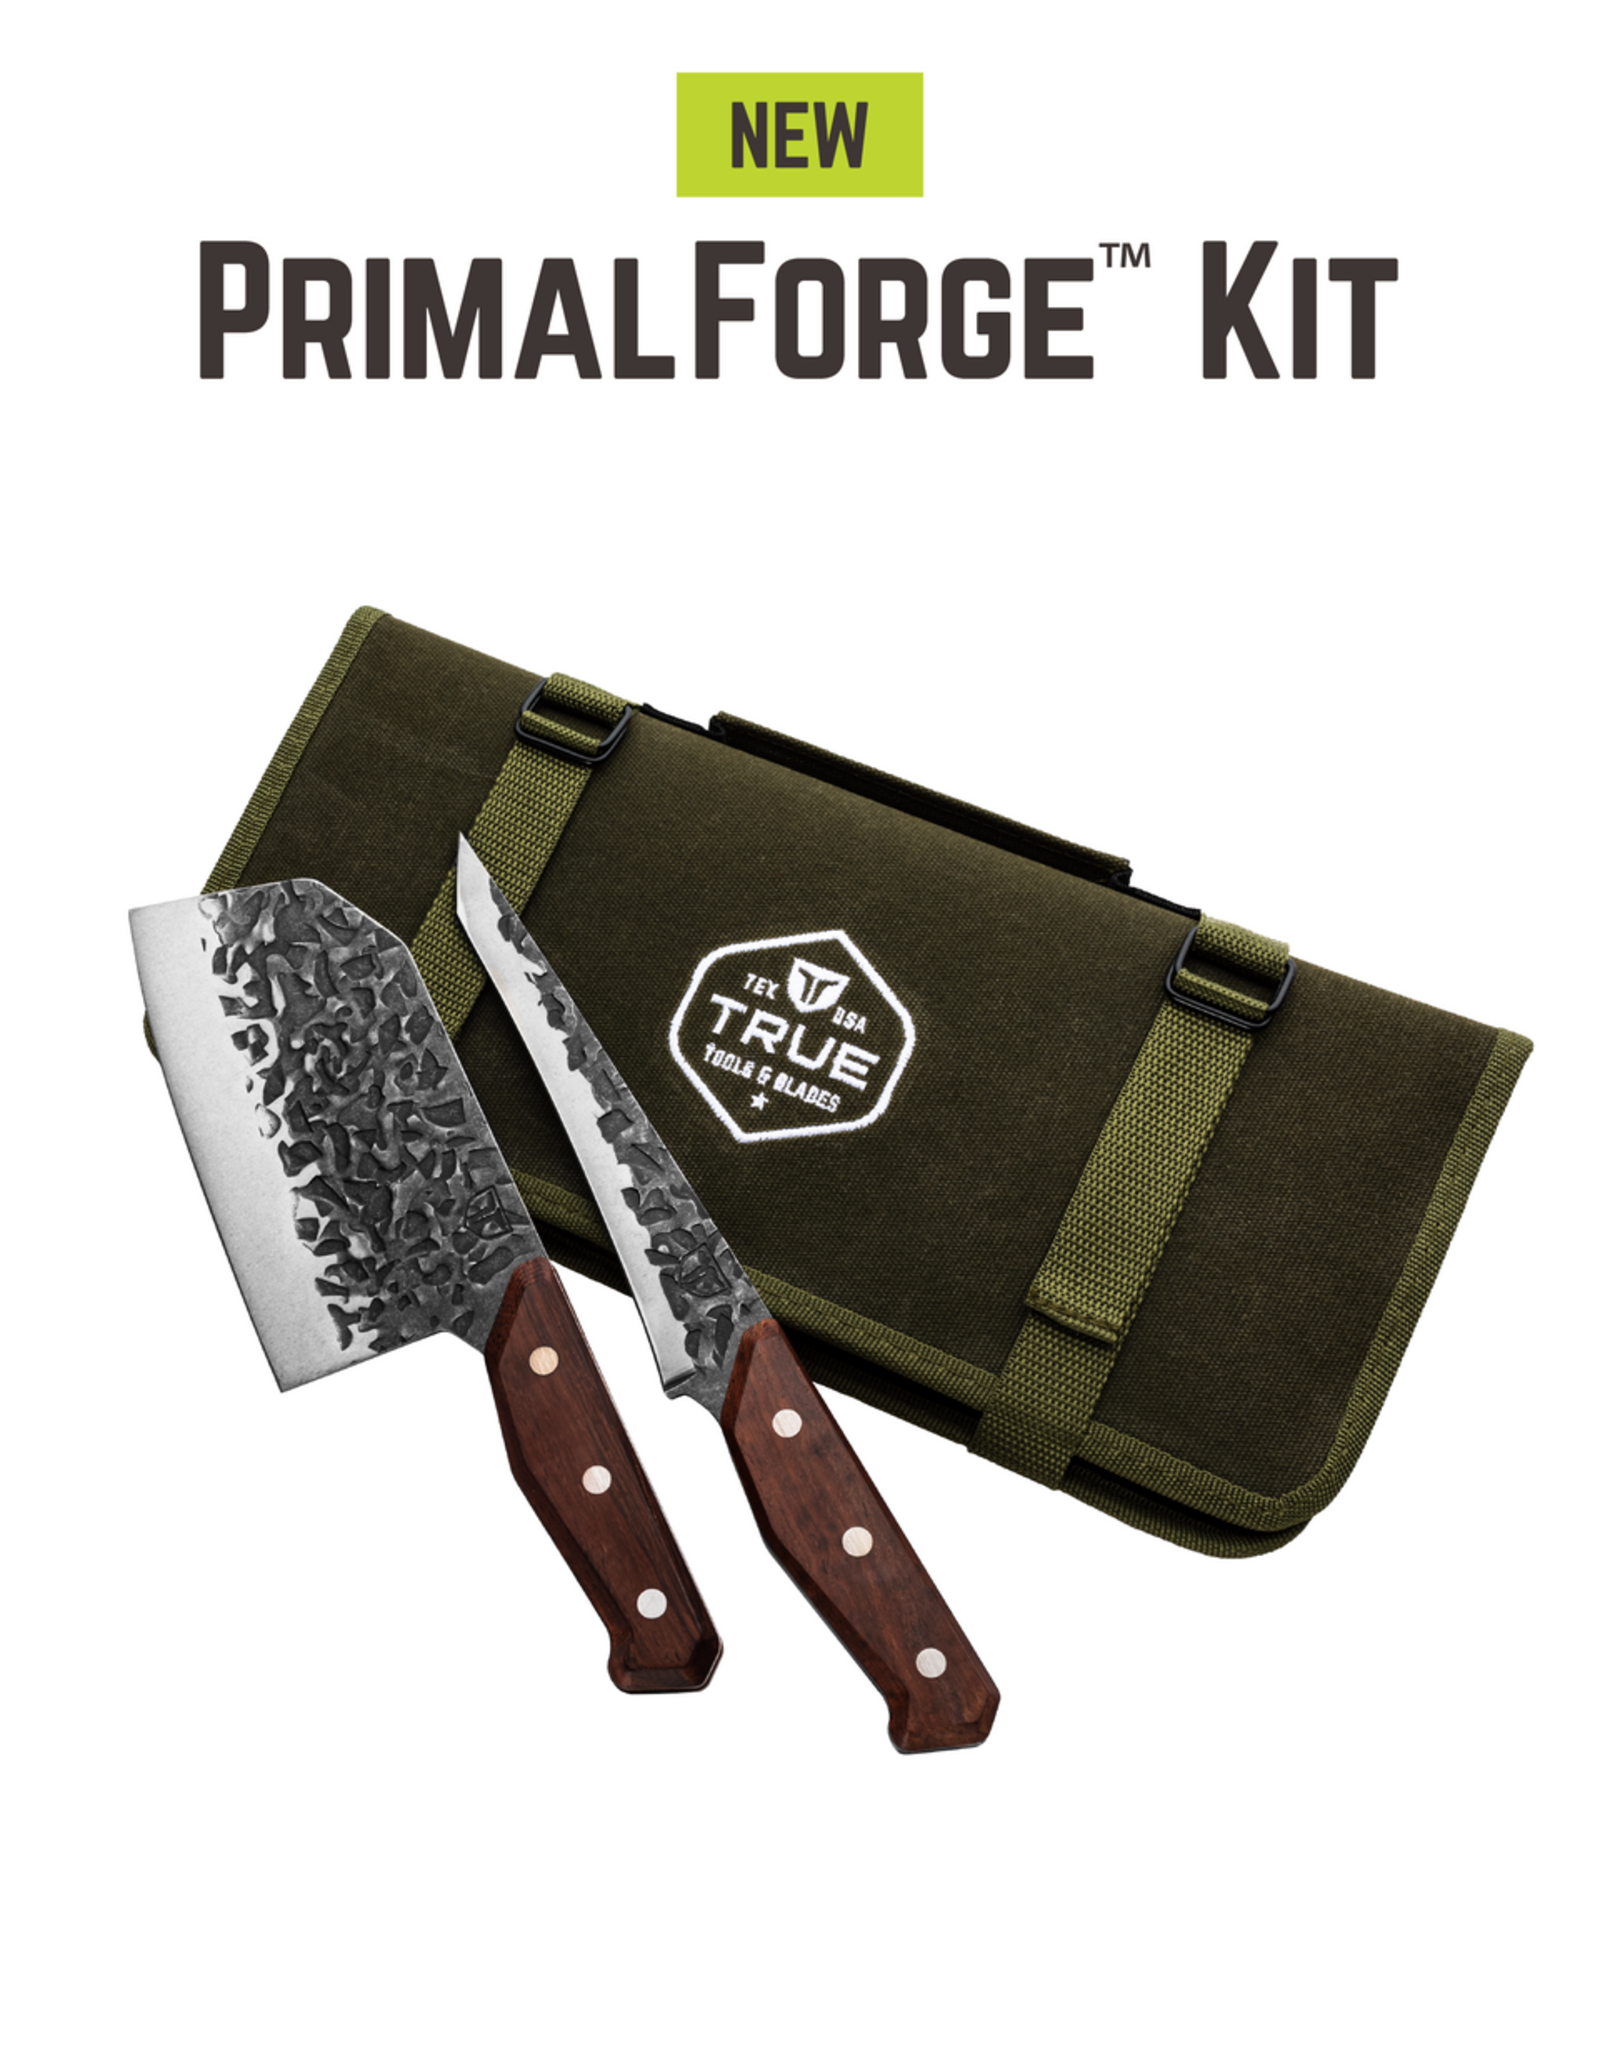 PrimalForge Kit